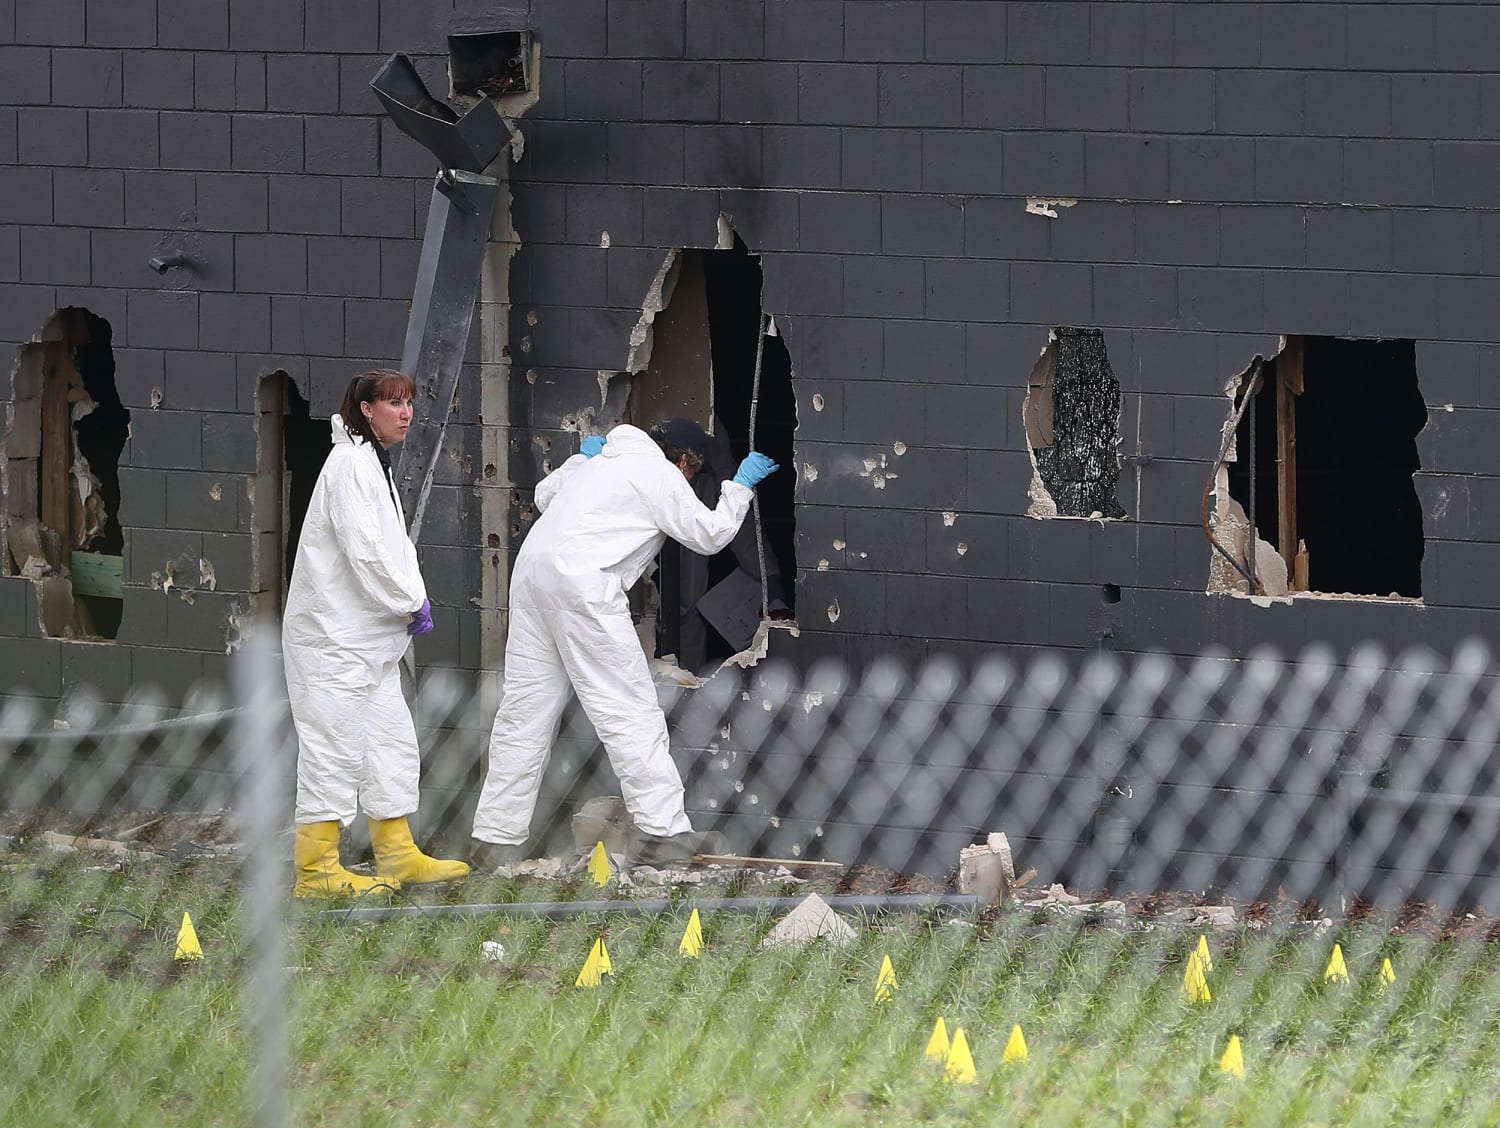 Orlando Nightclub Massacre Live Blog Latest Updates On Pulse Shooting